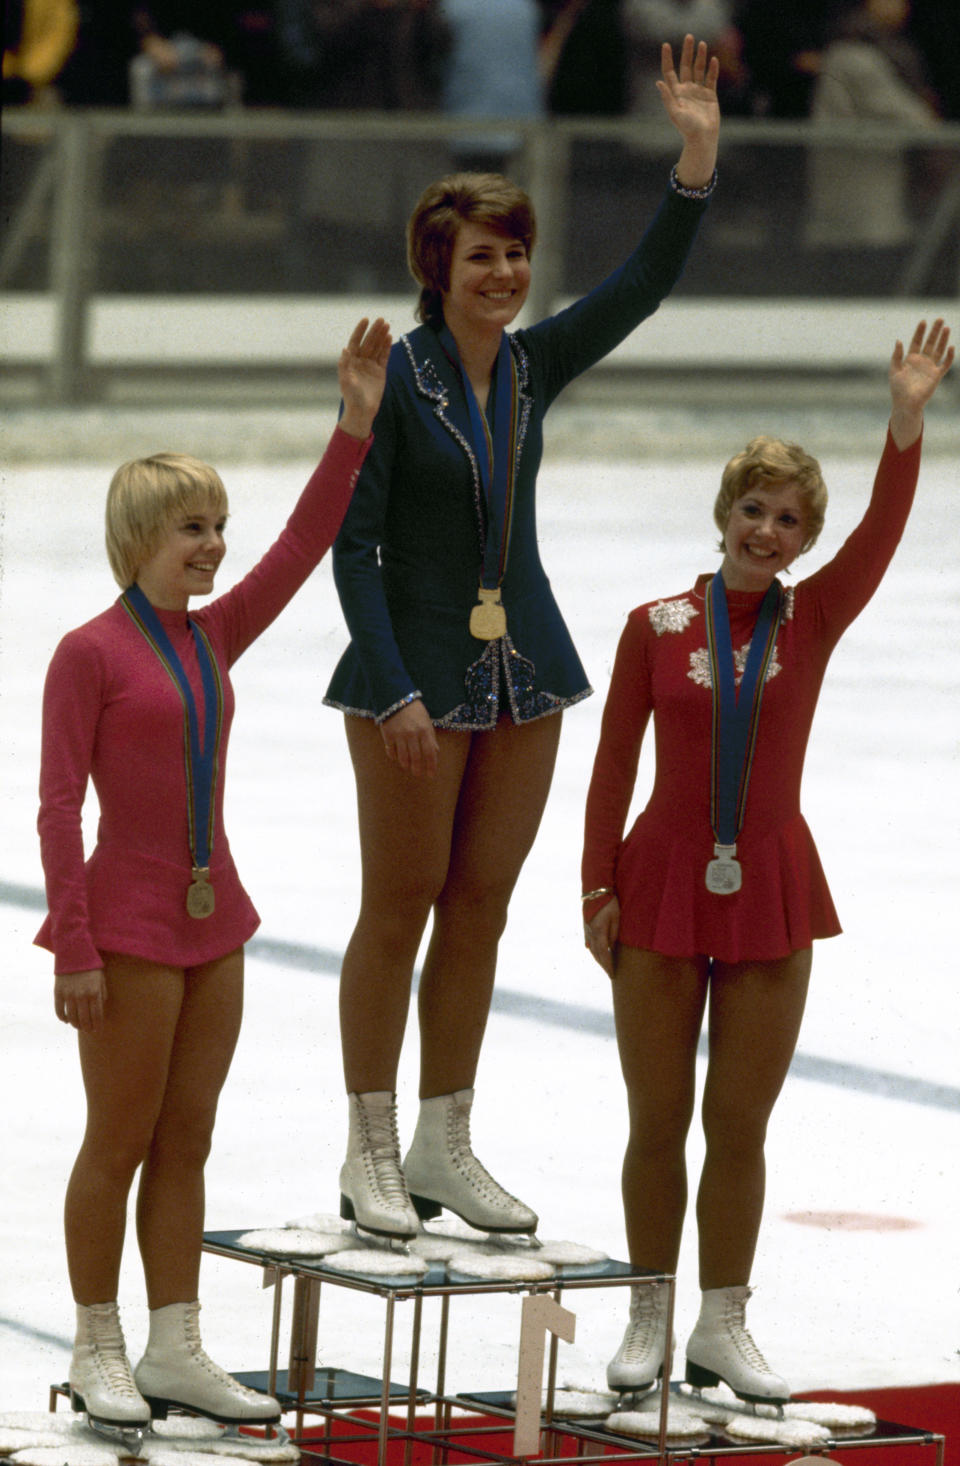 The three medal winners&nbsp;&mdash; Lynn of the U.S., Schuba of Austria, Magnussen of Canada&nbsp;&mdash; in ladies singles&nbsp;figure skating at the Winter Olympics in Sapporo, Japan, Feb. 7, 1972.